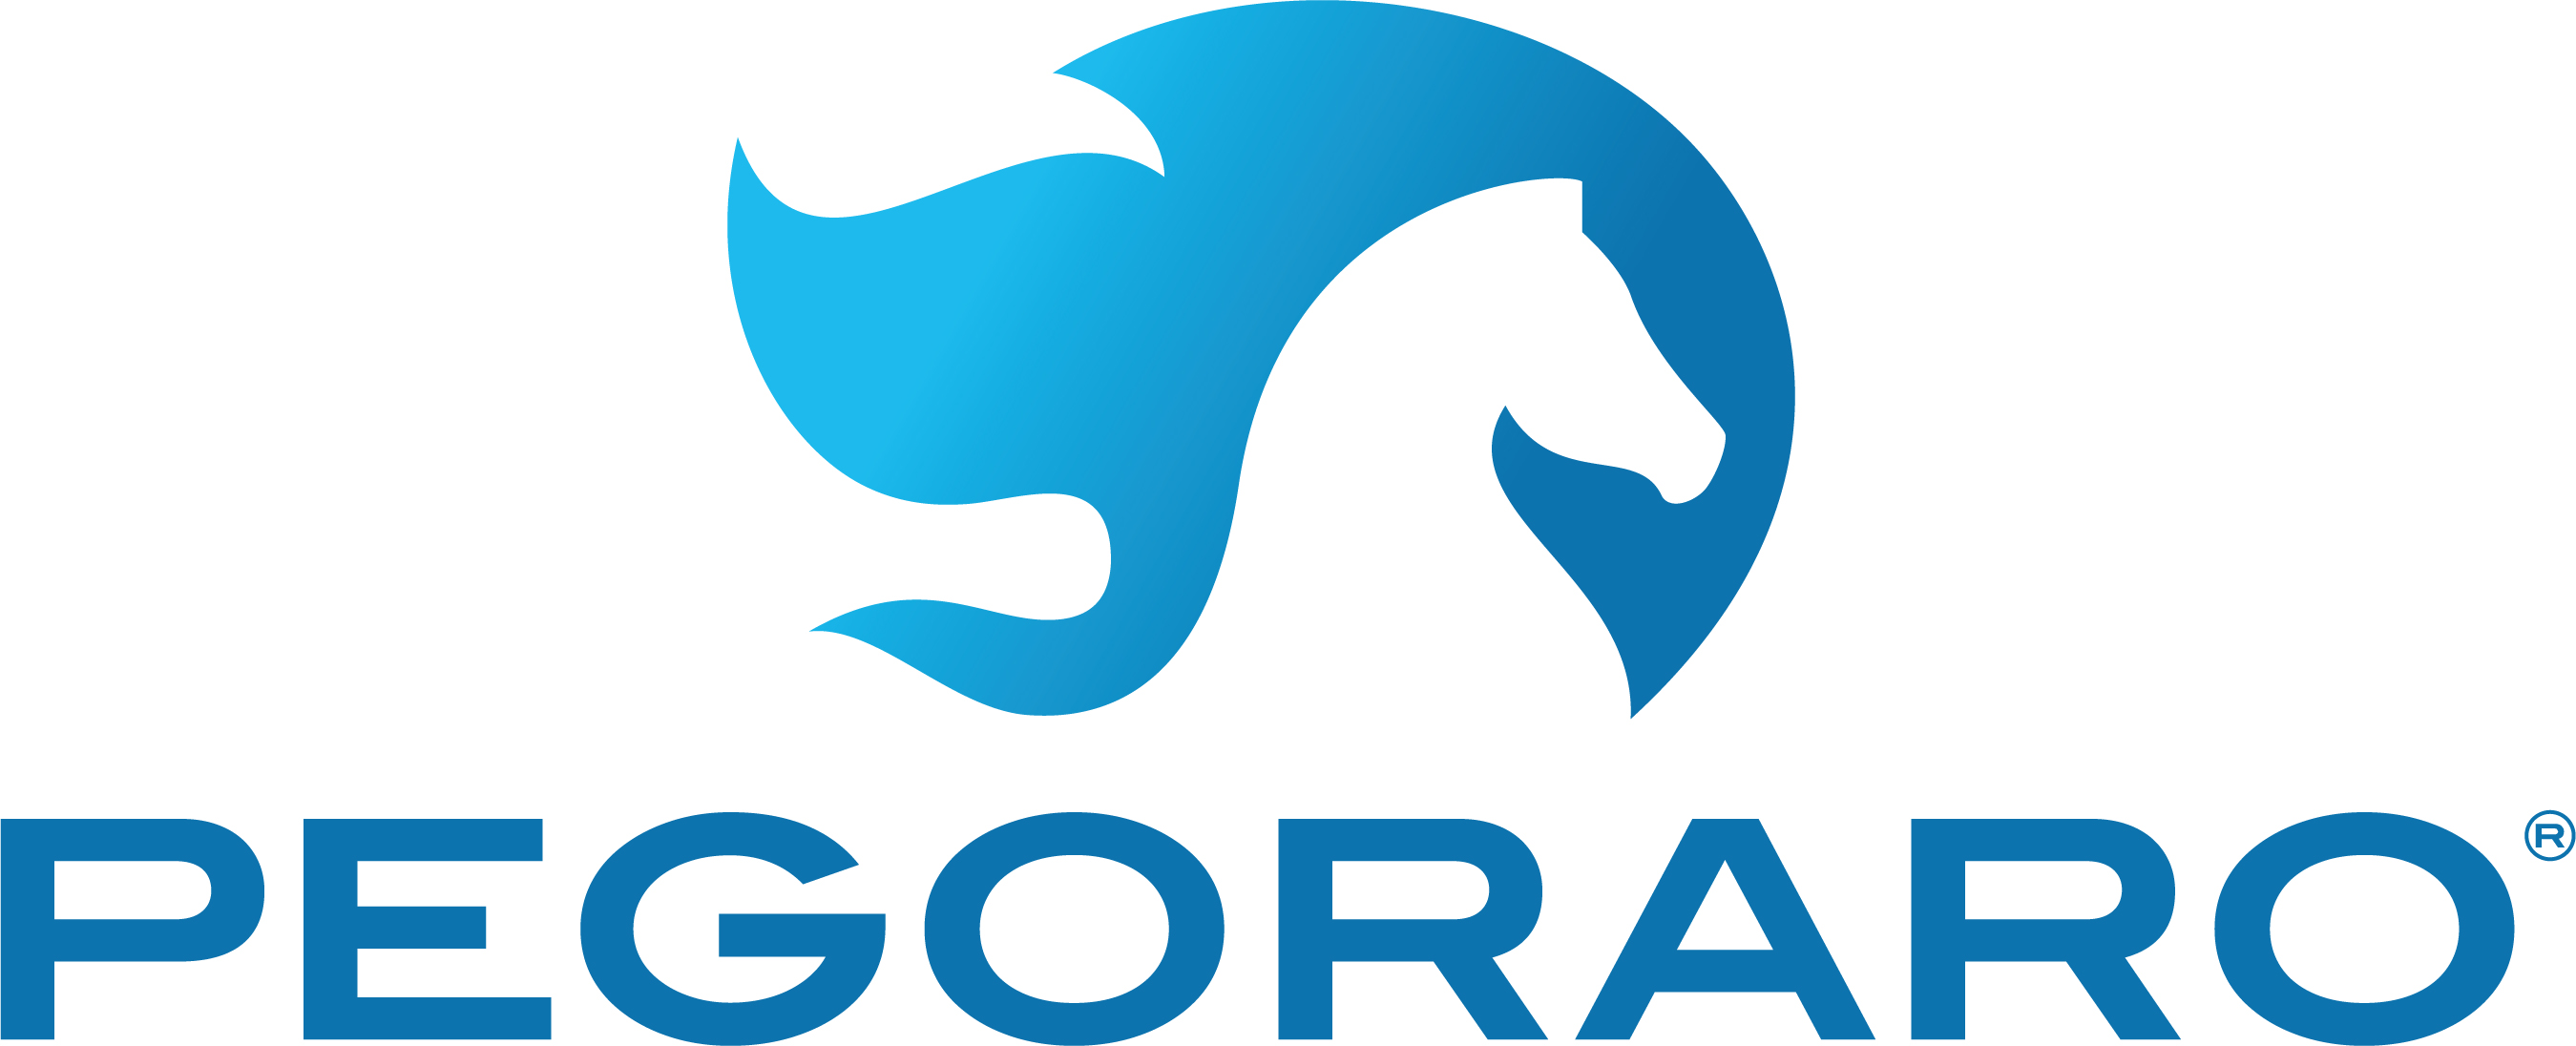 Organisation Logo - PEGORARO GAS TECHNOLOGIES SRL